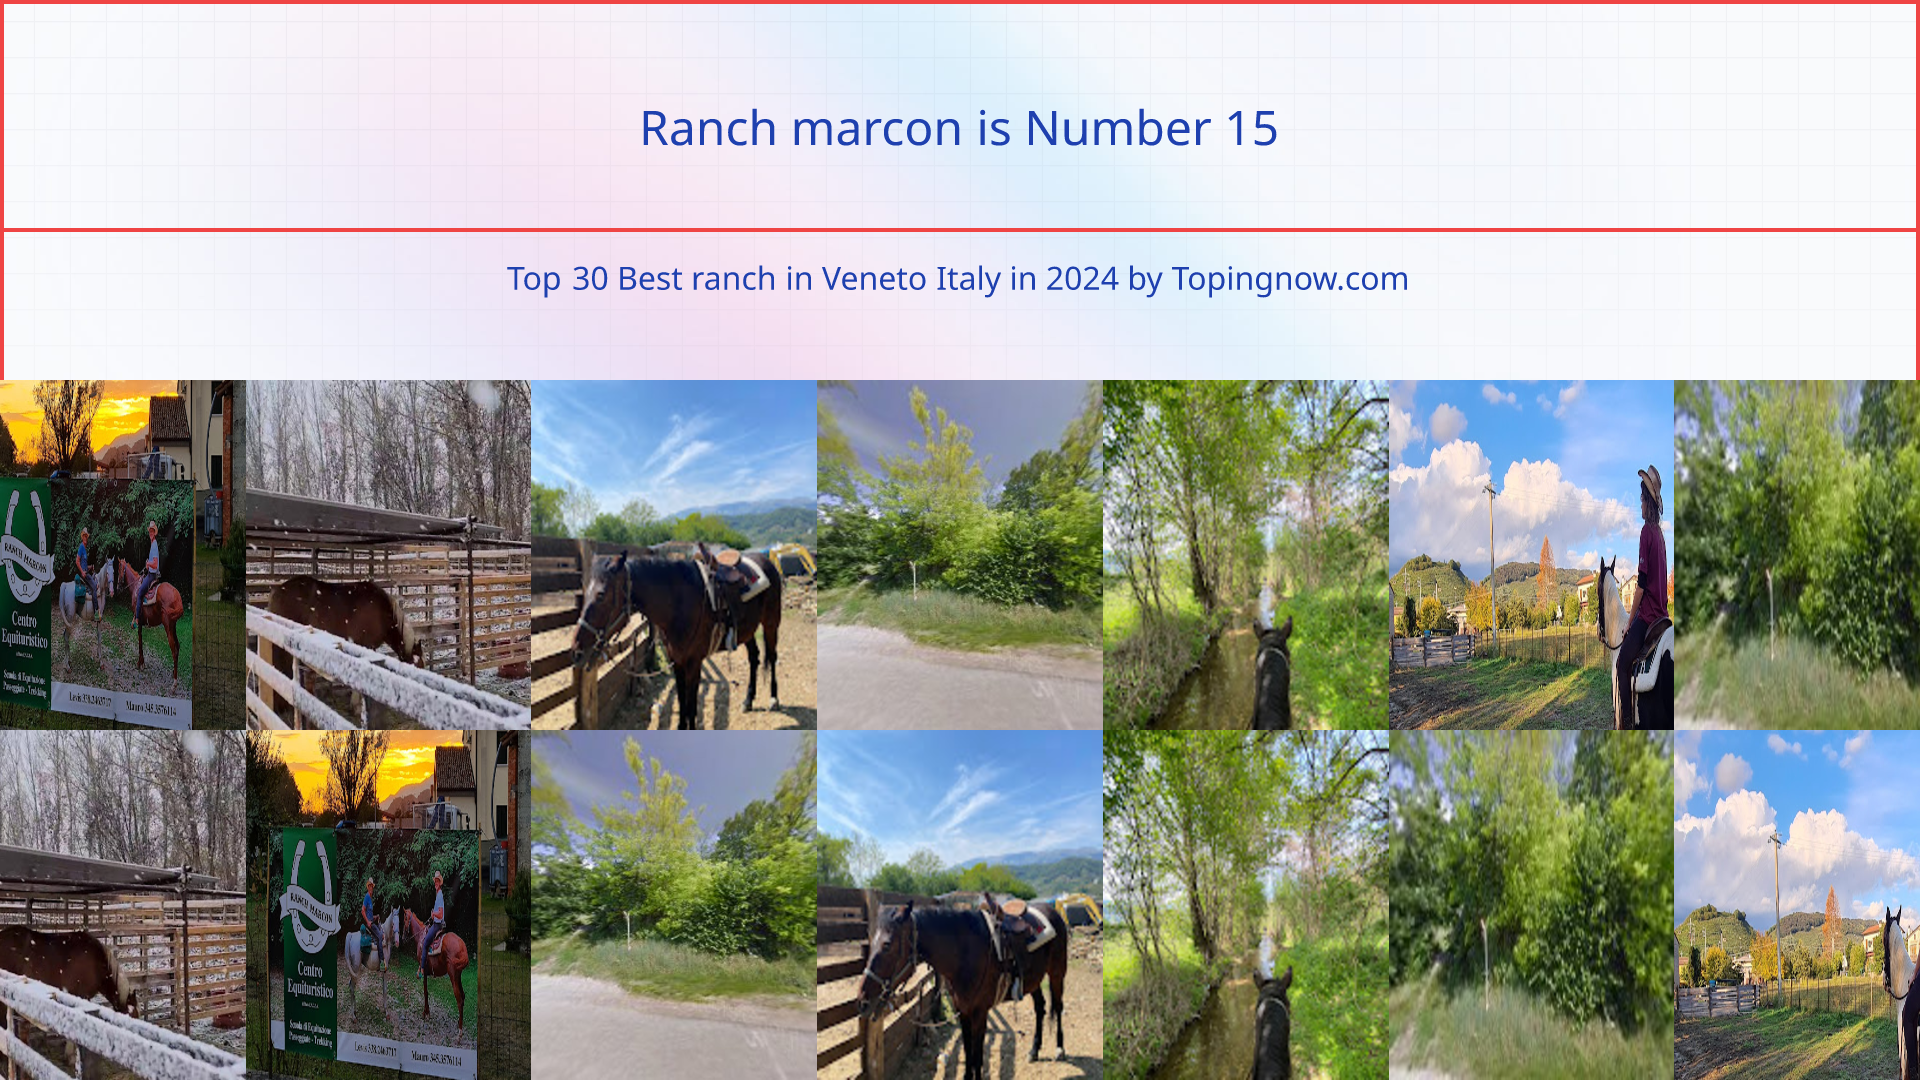 Ranch marcon: Top 30 Best ranch in Veneto Italy in 2024